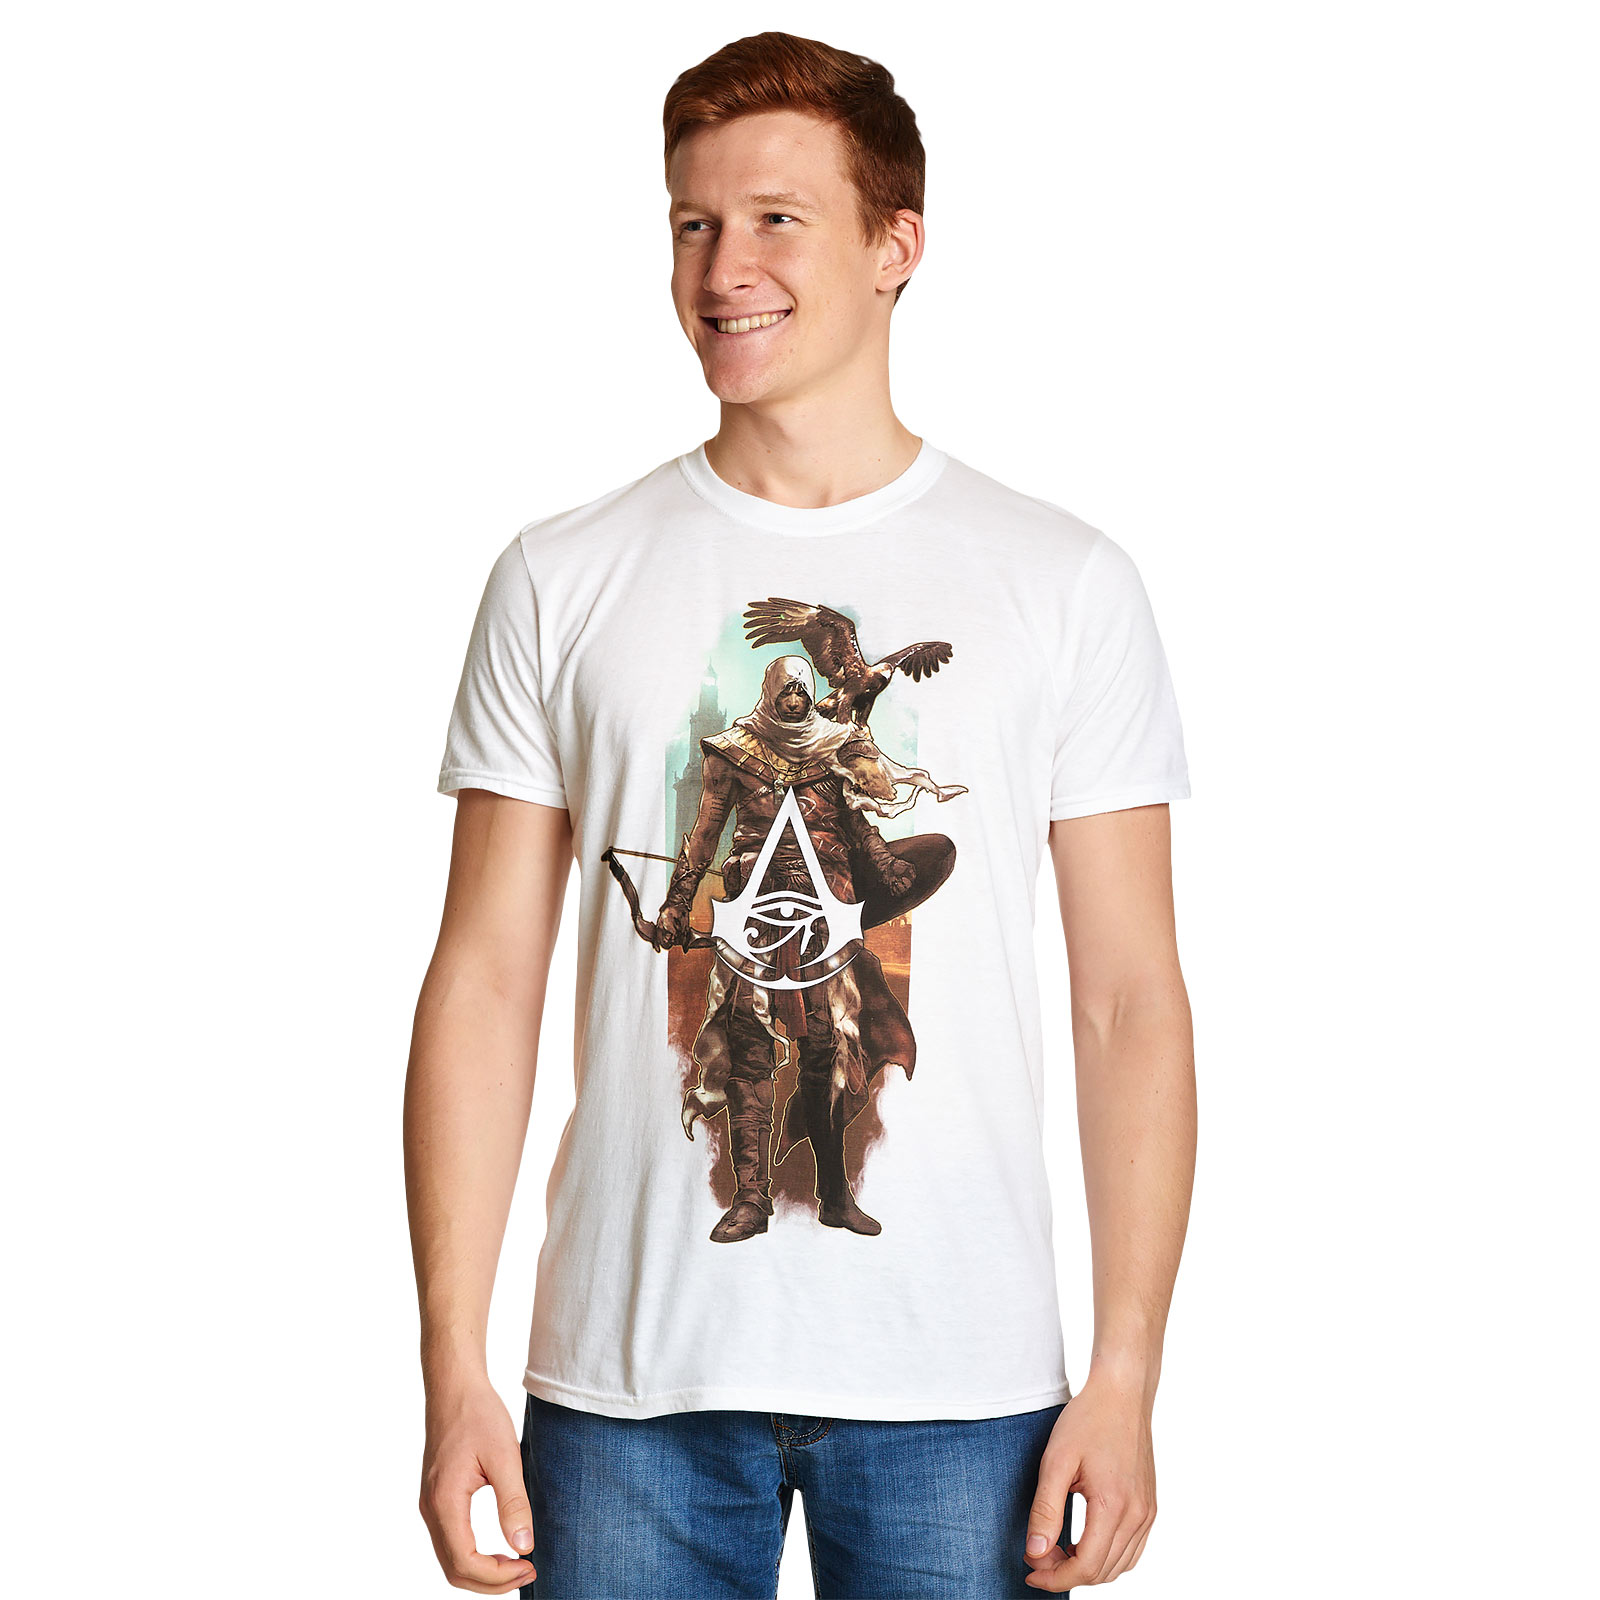 Assassins Creed - Bayek with Senu T-Shirt white